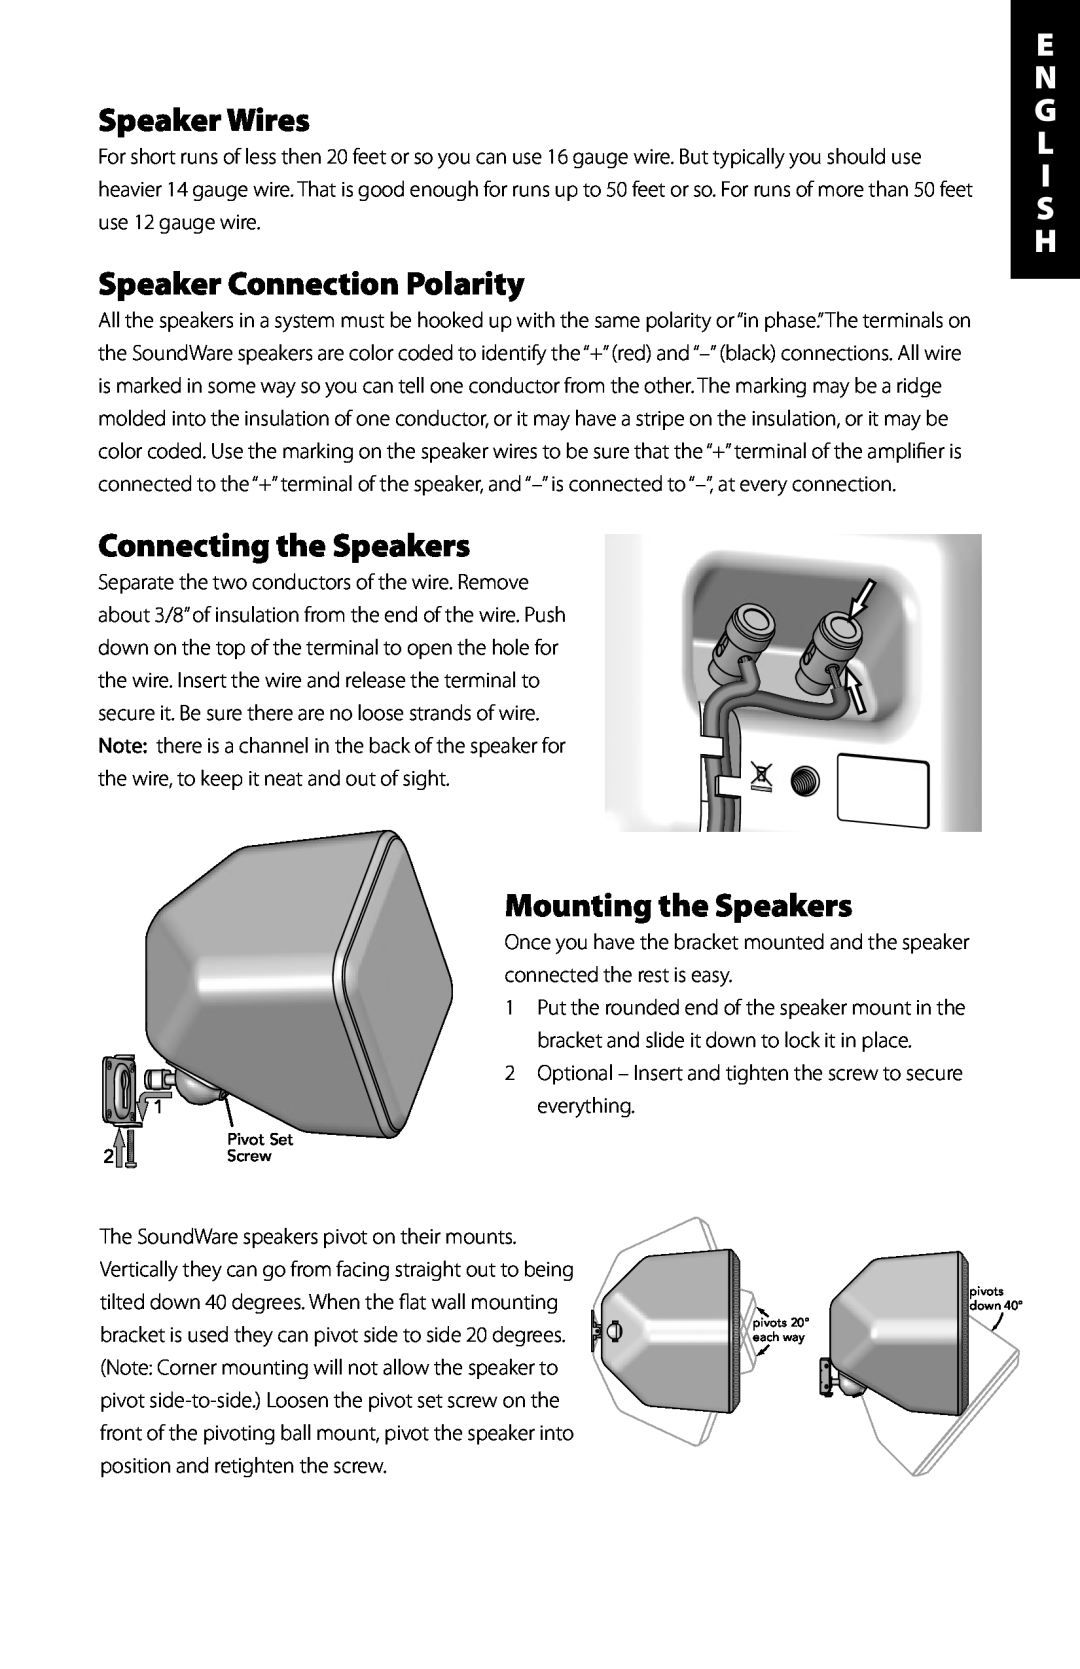 Boston Acoustics Indoor / Outdoor Speaker manual Speaker Wires, Speaker Connection Polarity, Connecting the Speakers 